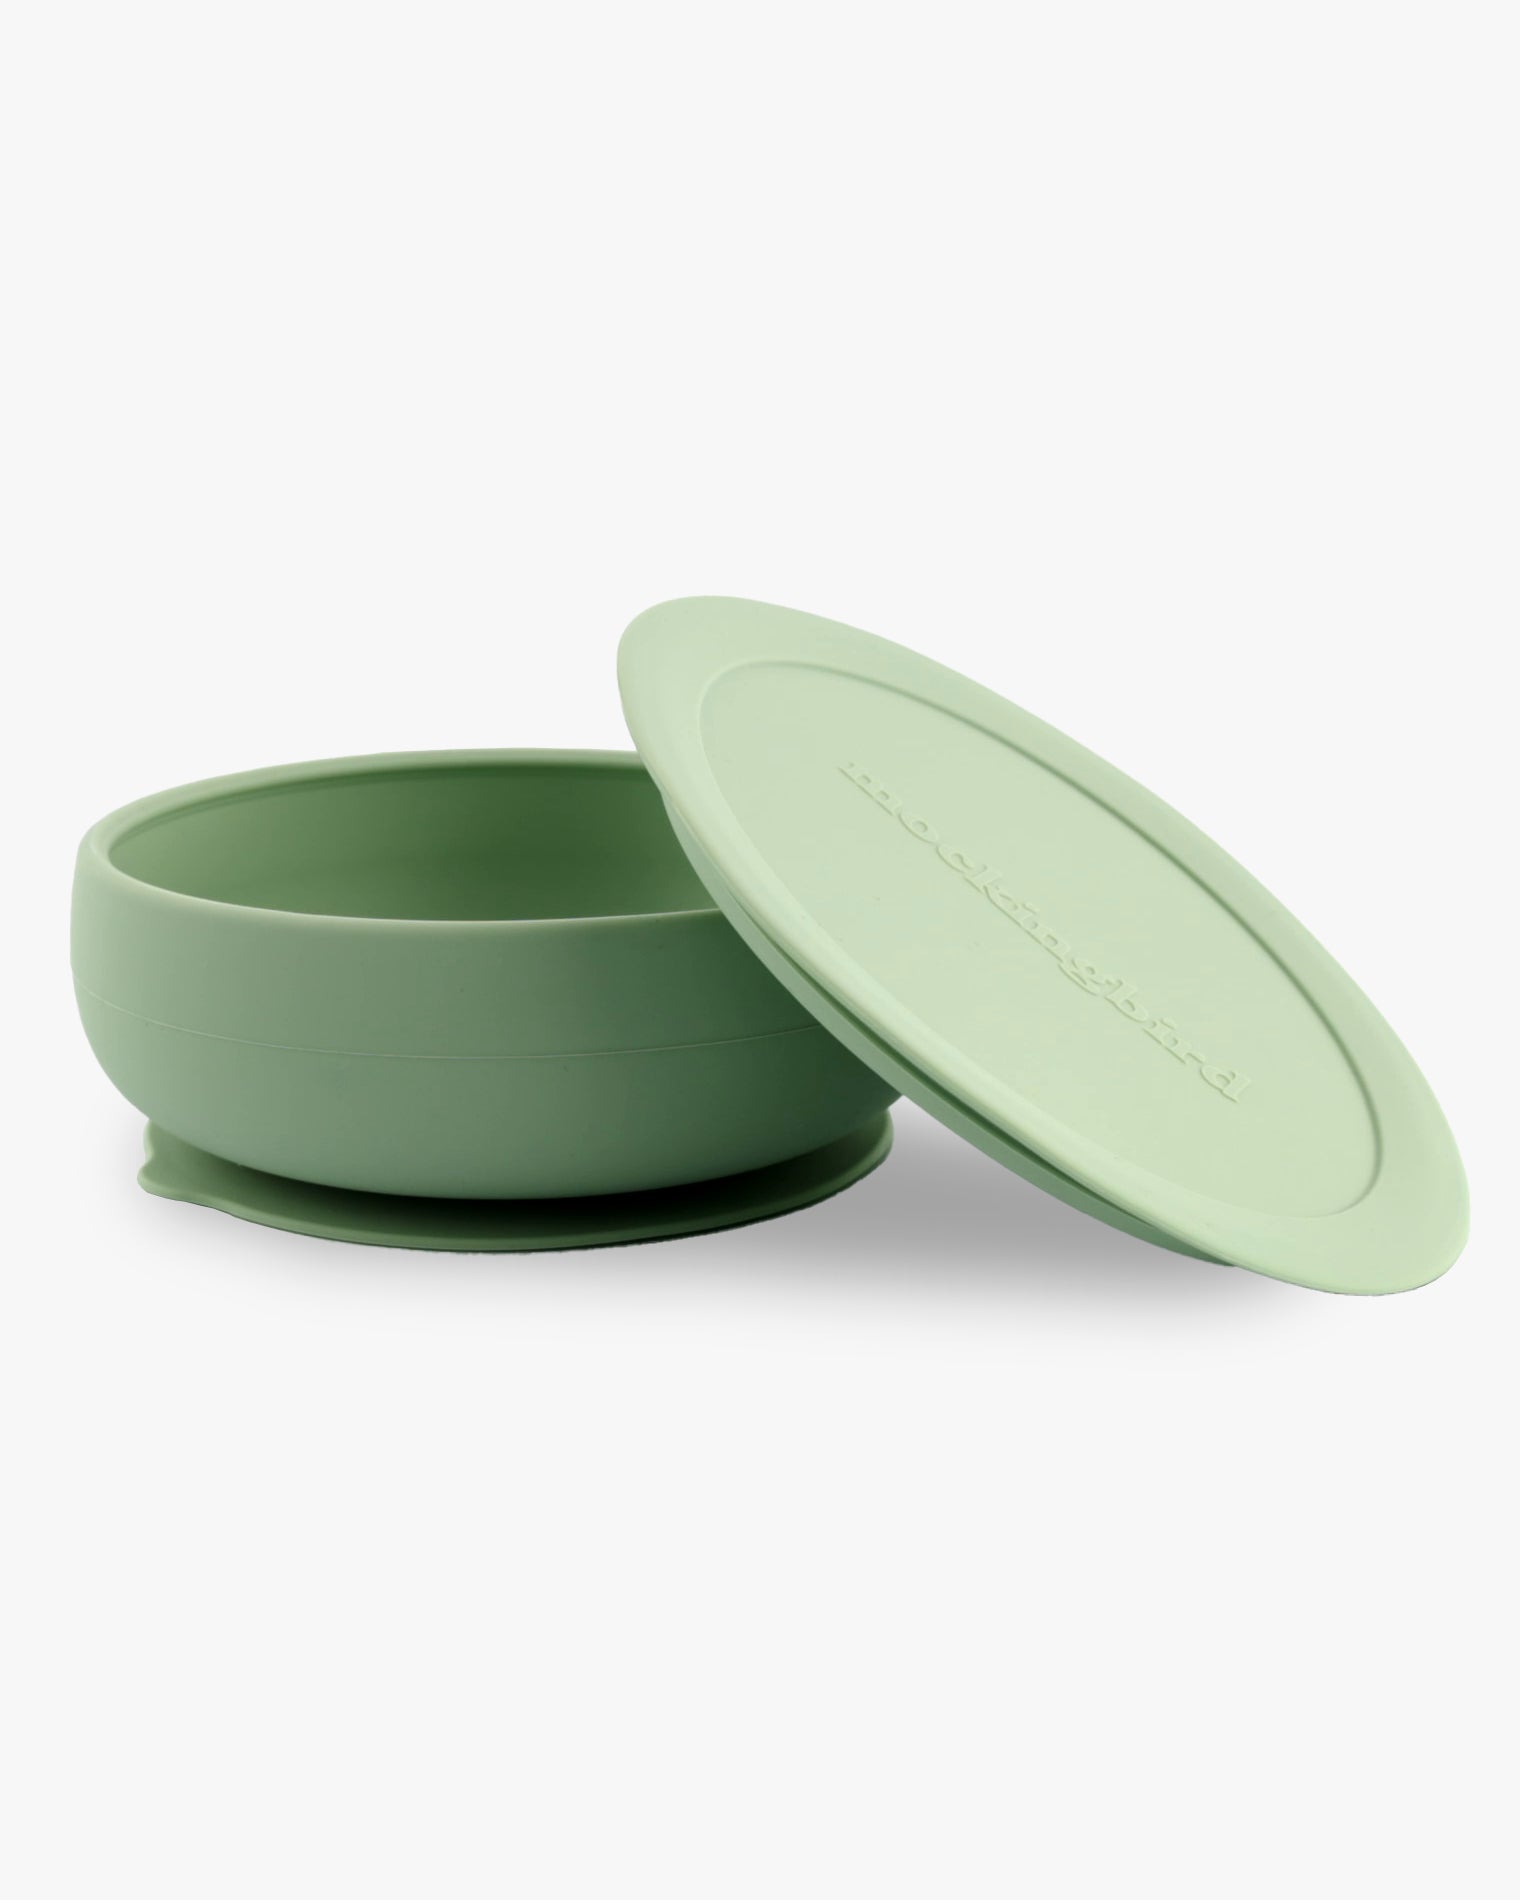 Mockingbird dishware set showing the sage green bowl and lid